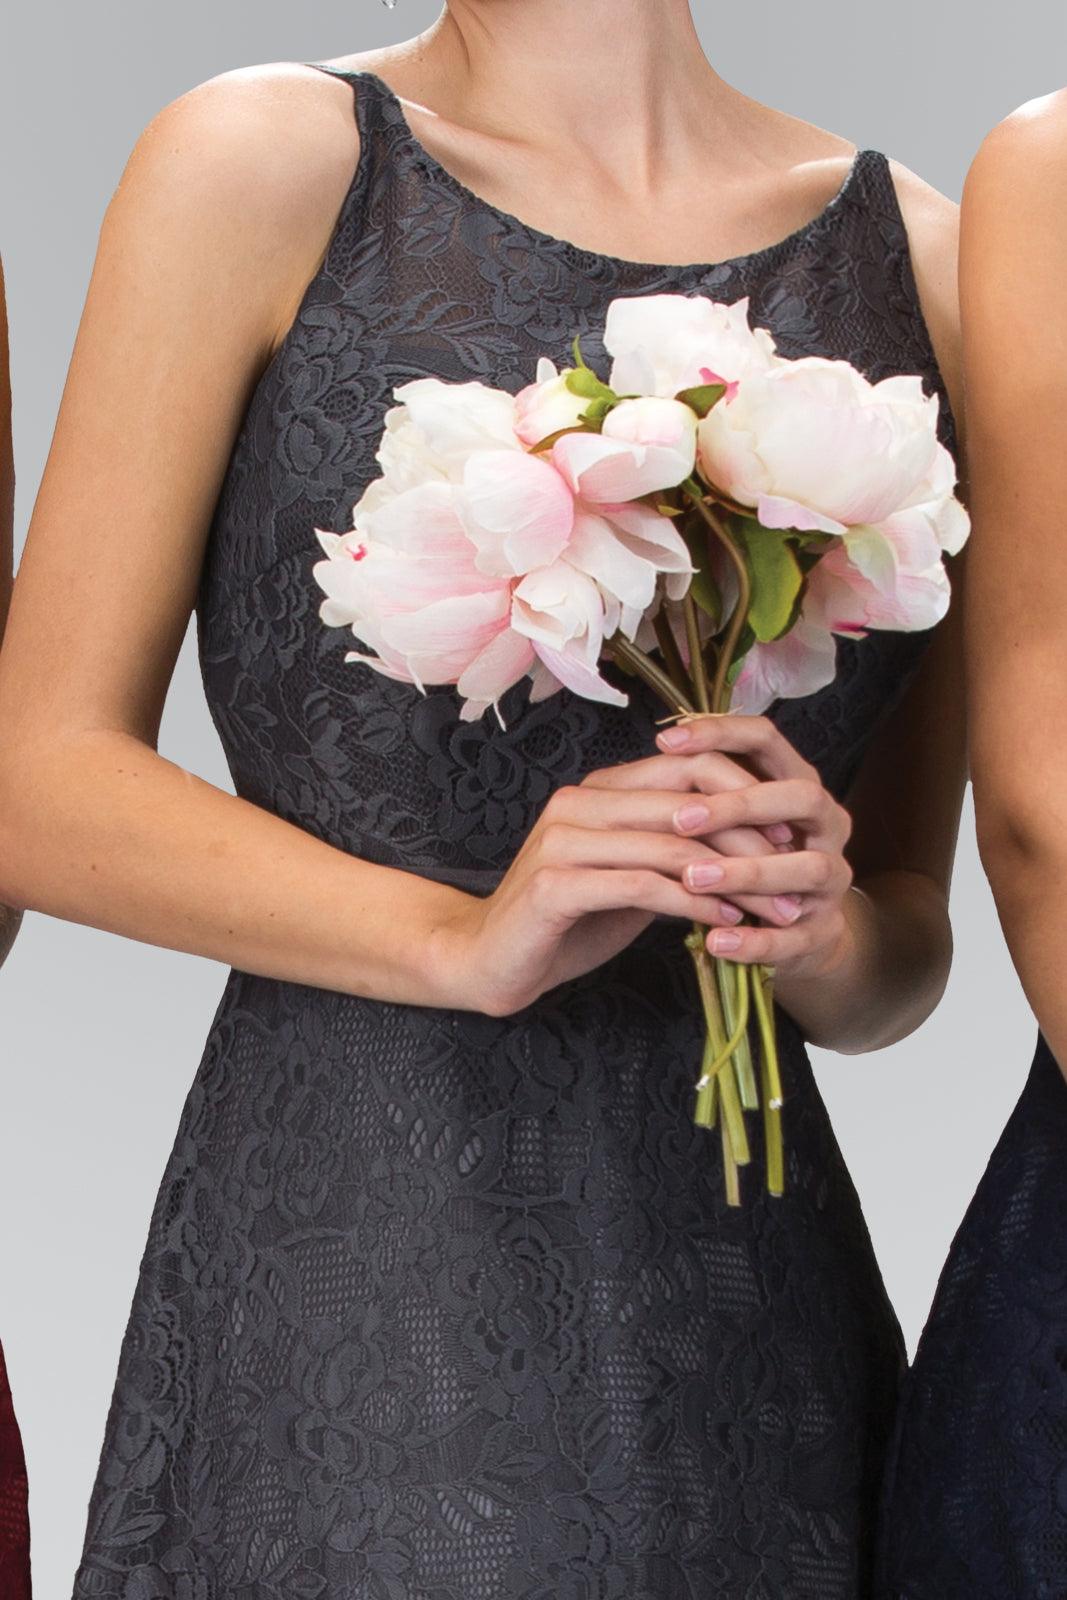 Sleeveless Lace Open Back Prom Dress Formal - The Dress Outlet Elizabeth K